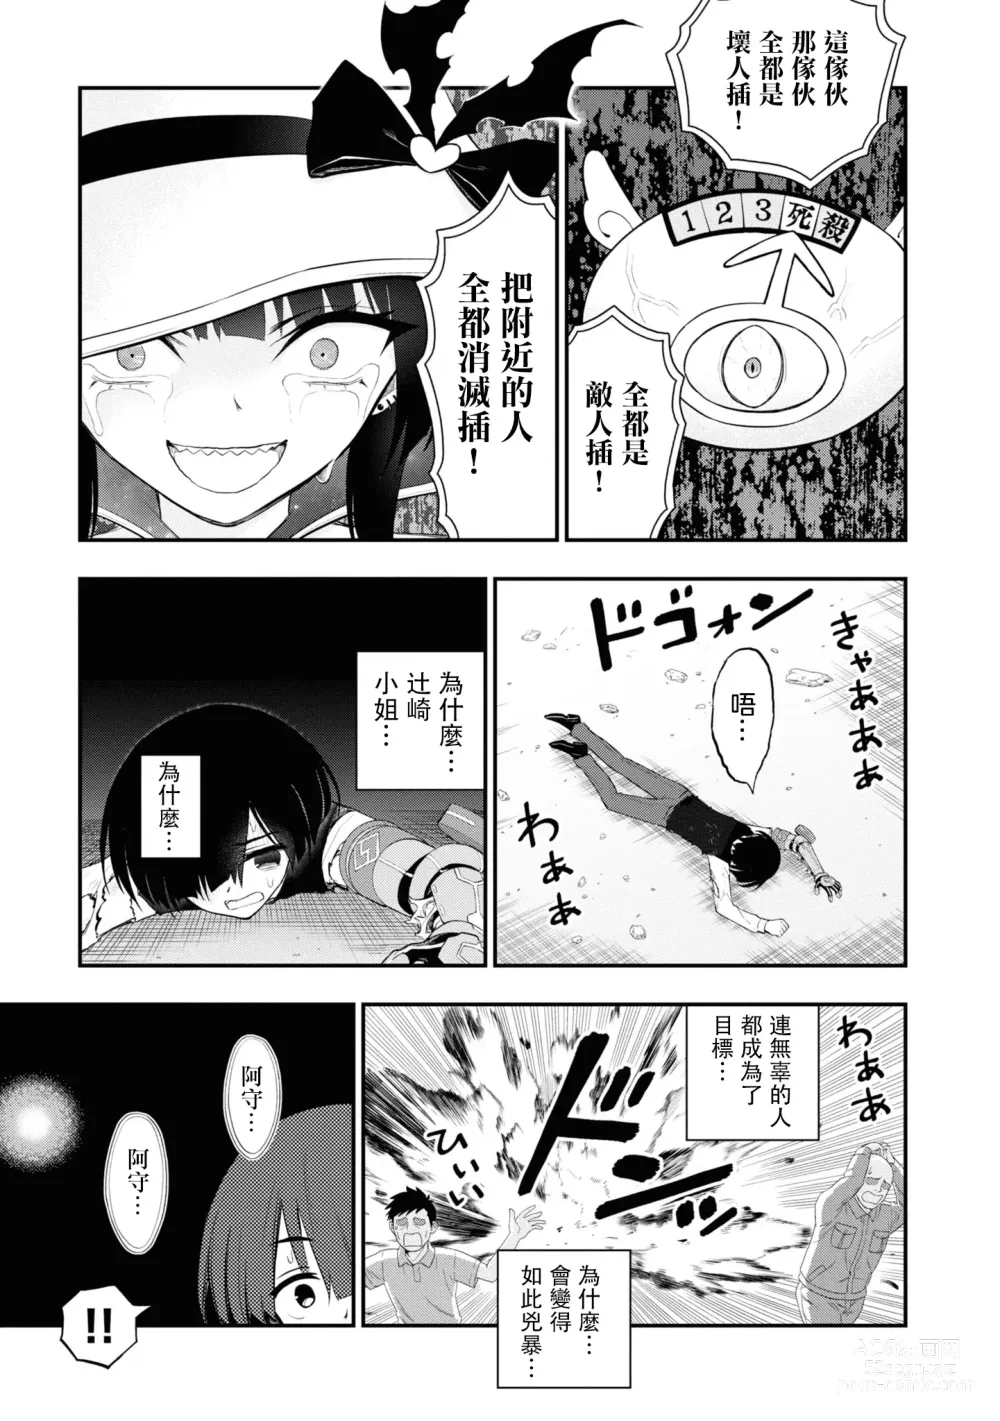 Page 612 of doujinshi 愛情社區